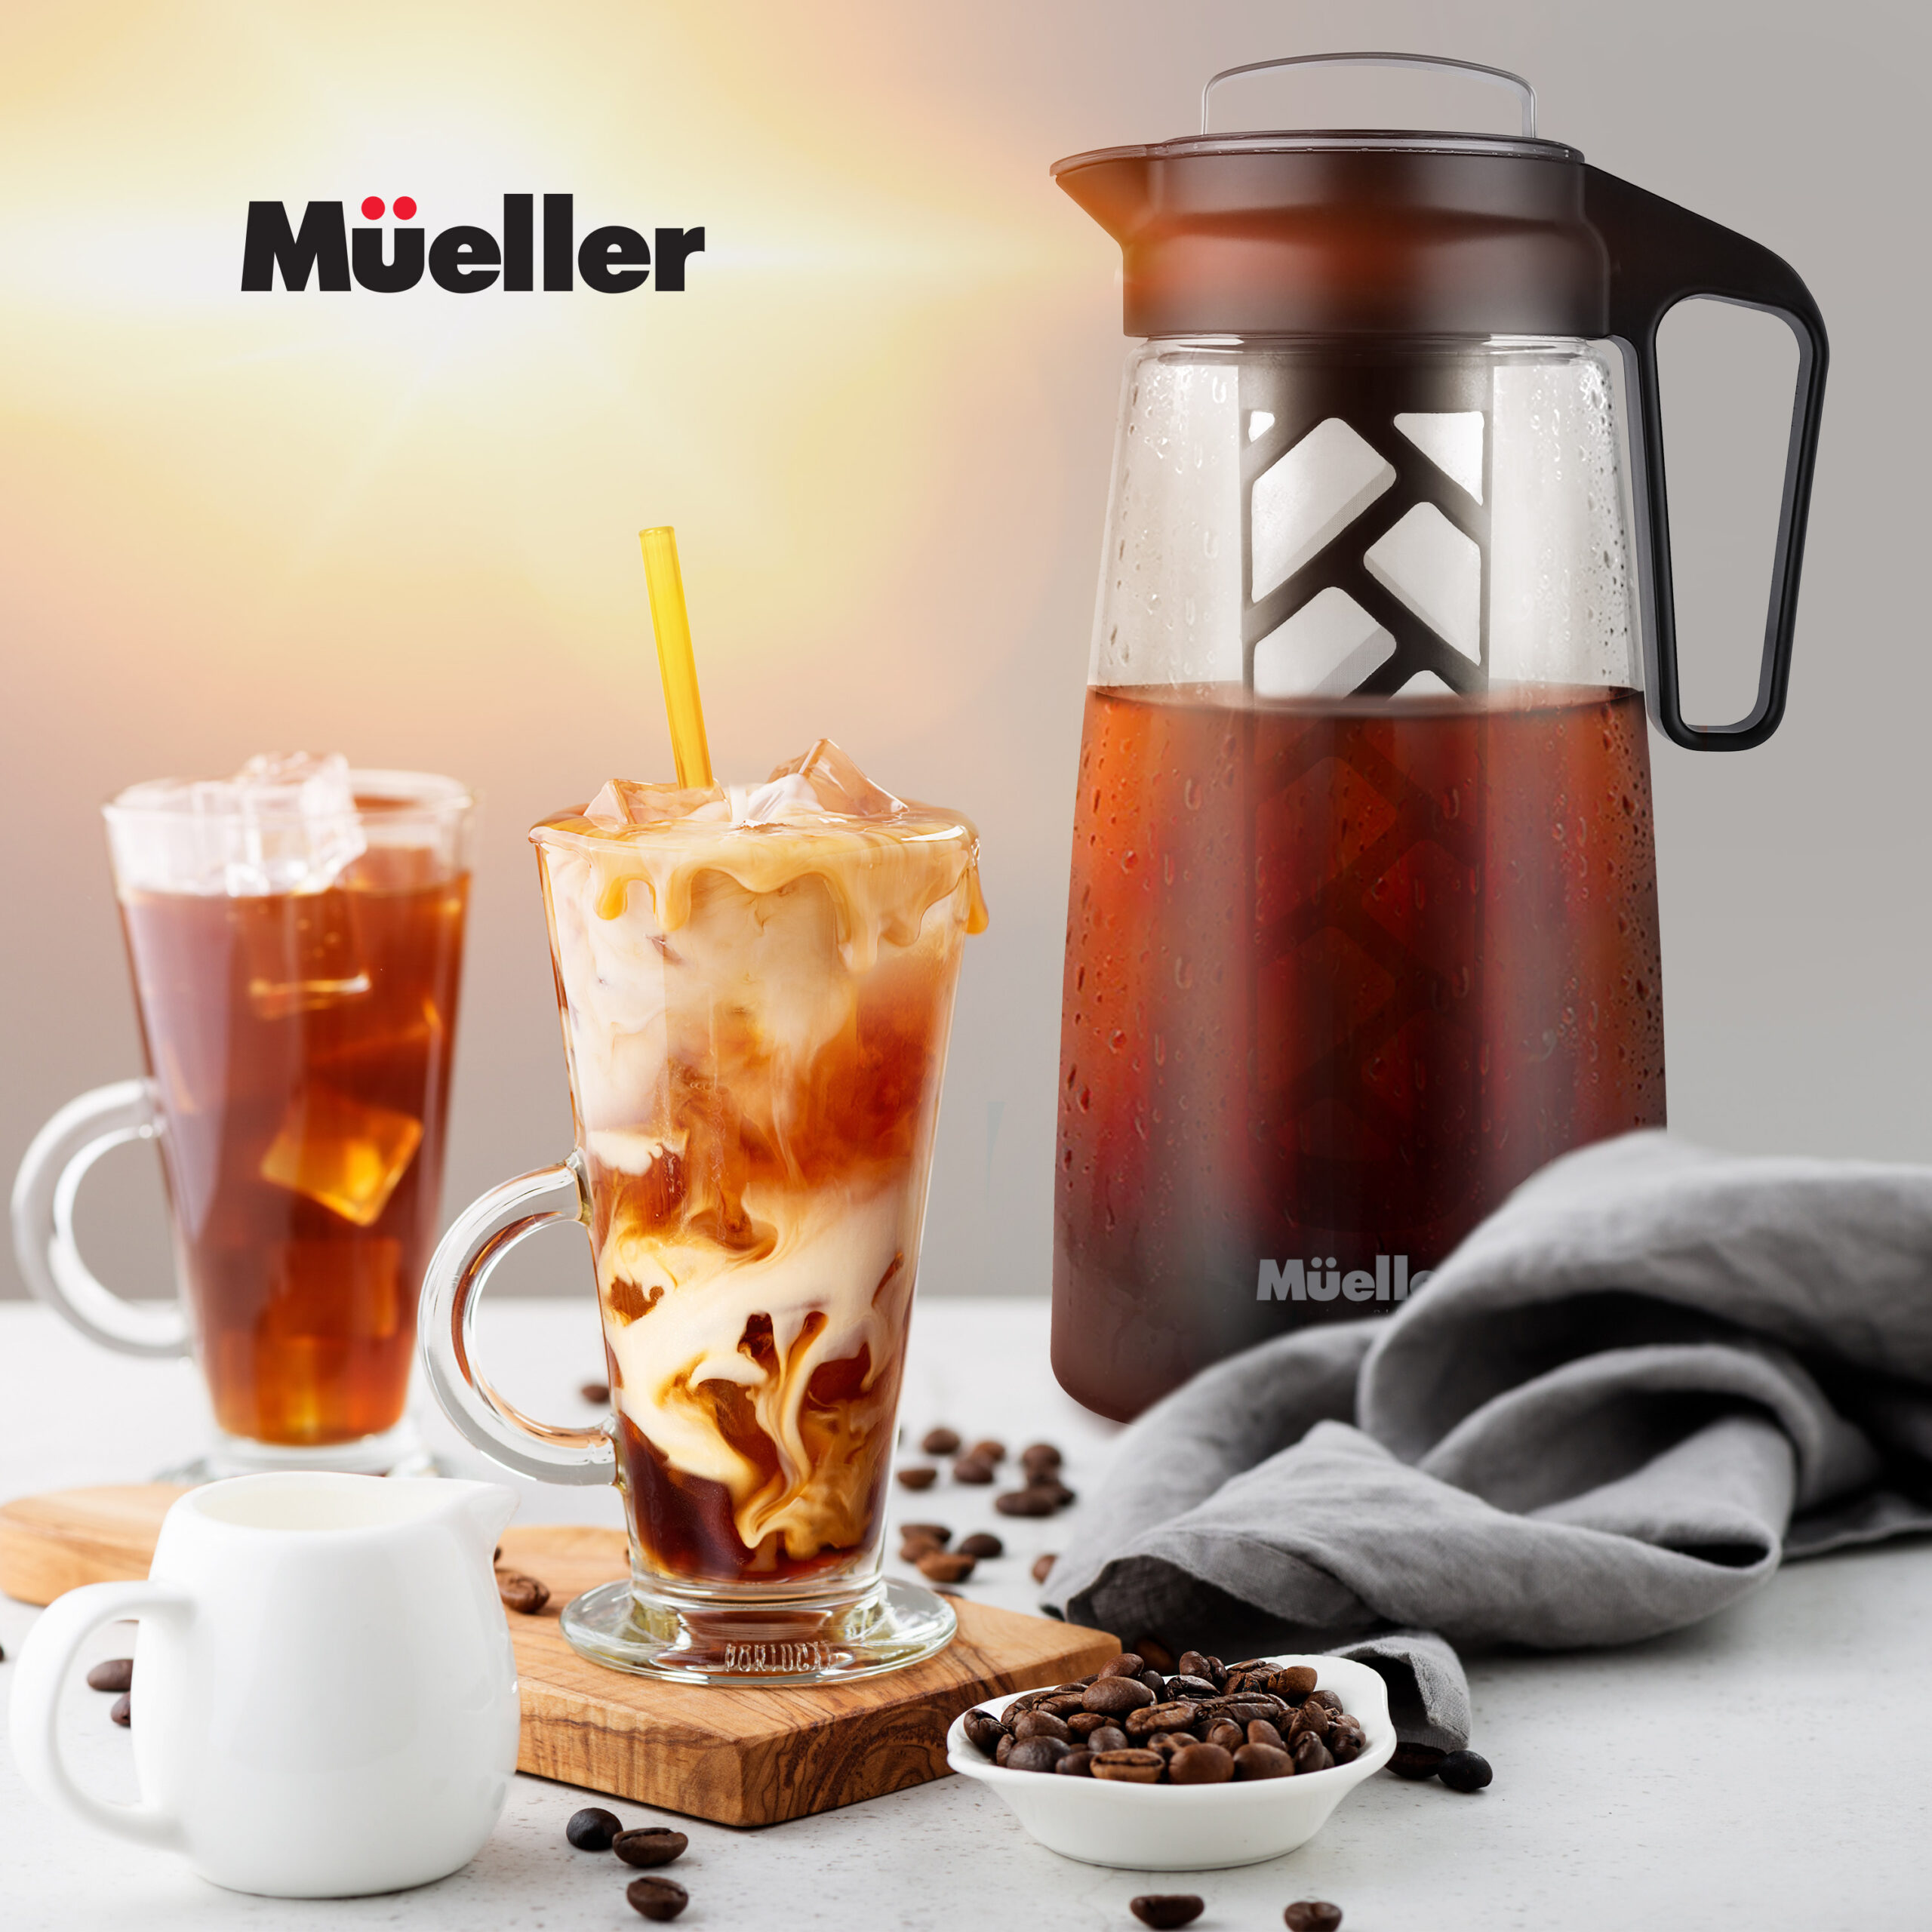 5-Mueller-Cold-Brew-Coffee-Maker-2L-SmoothBrew